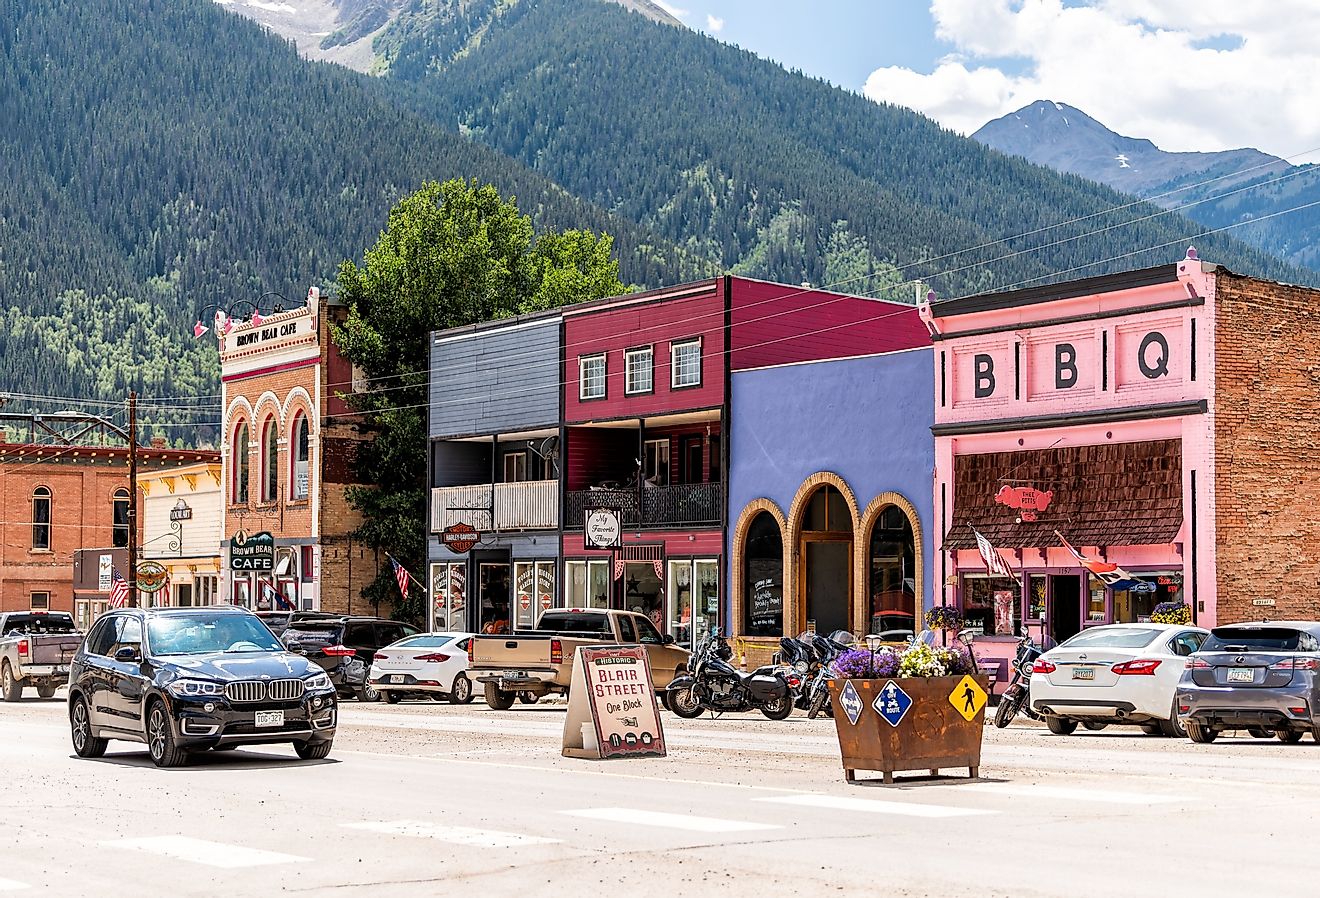 Downtown street in Silverton, Colorado. Image credit Kristi Blokhin via Shutterstock